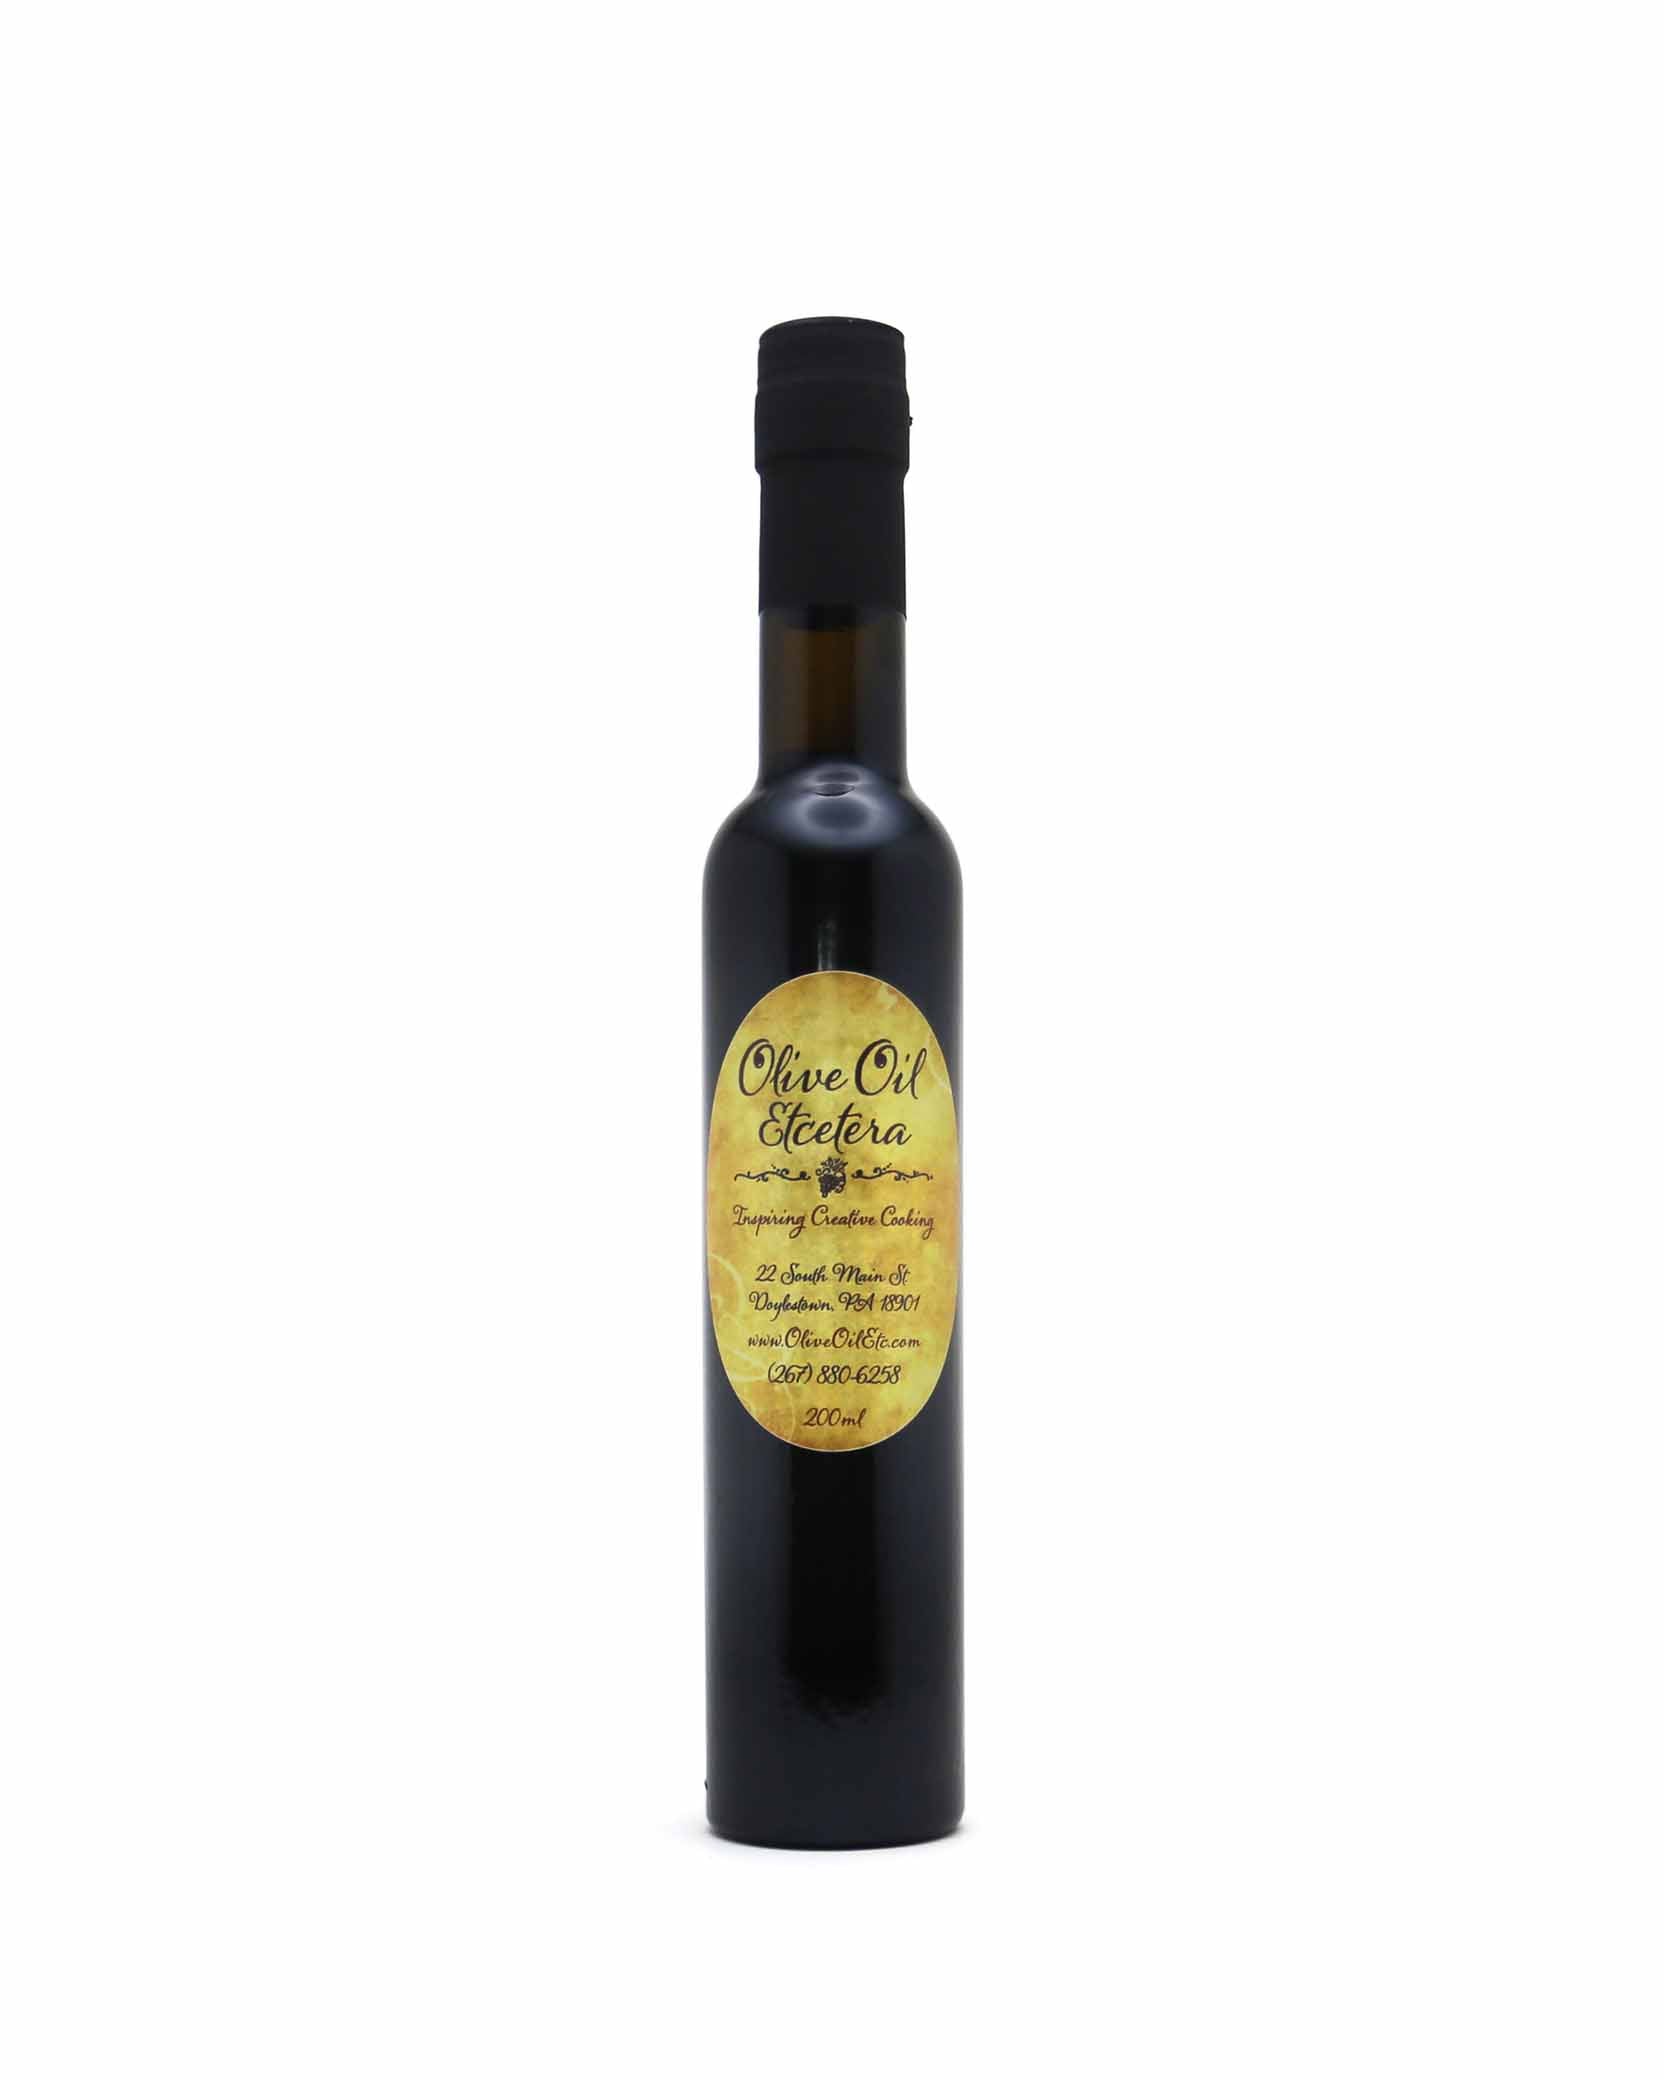 Cranberry Pear White Balsamic Vinegar - Olive Oil Etcetera - Bucks county's gourmet olive oil and vinegar shop